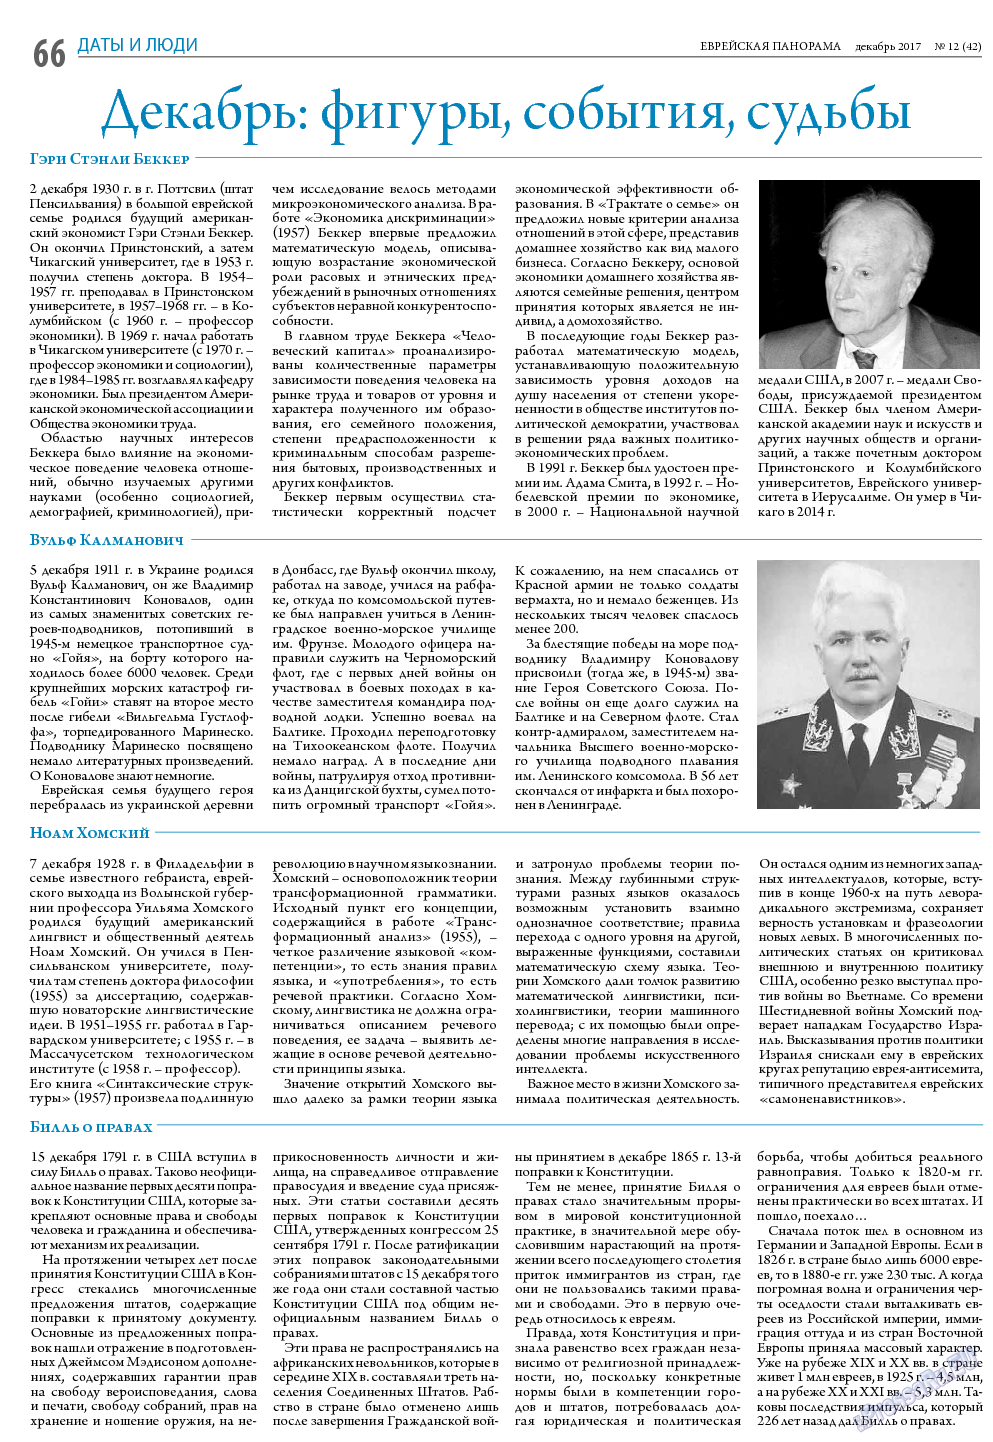 Еврейская панорама, газета. 2017 №12 стр.66